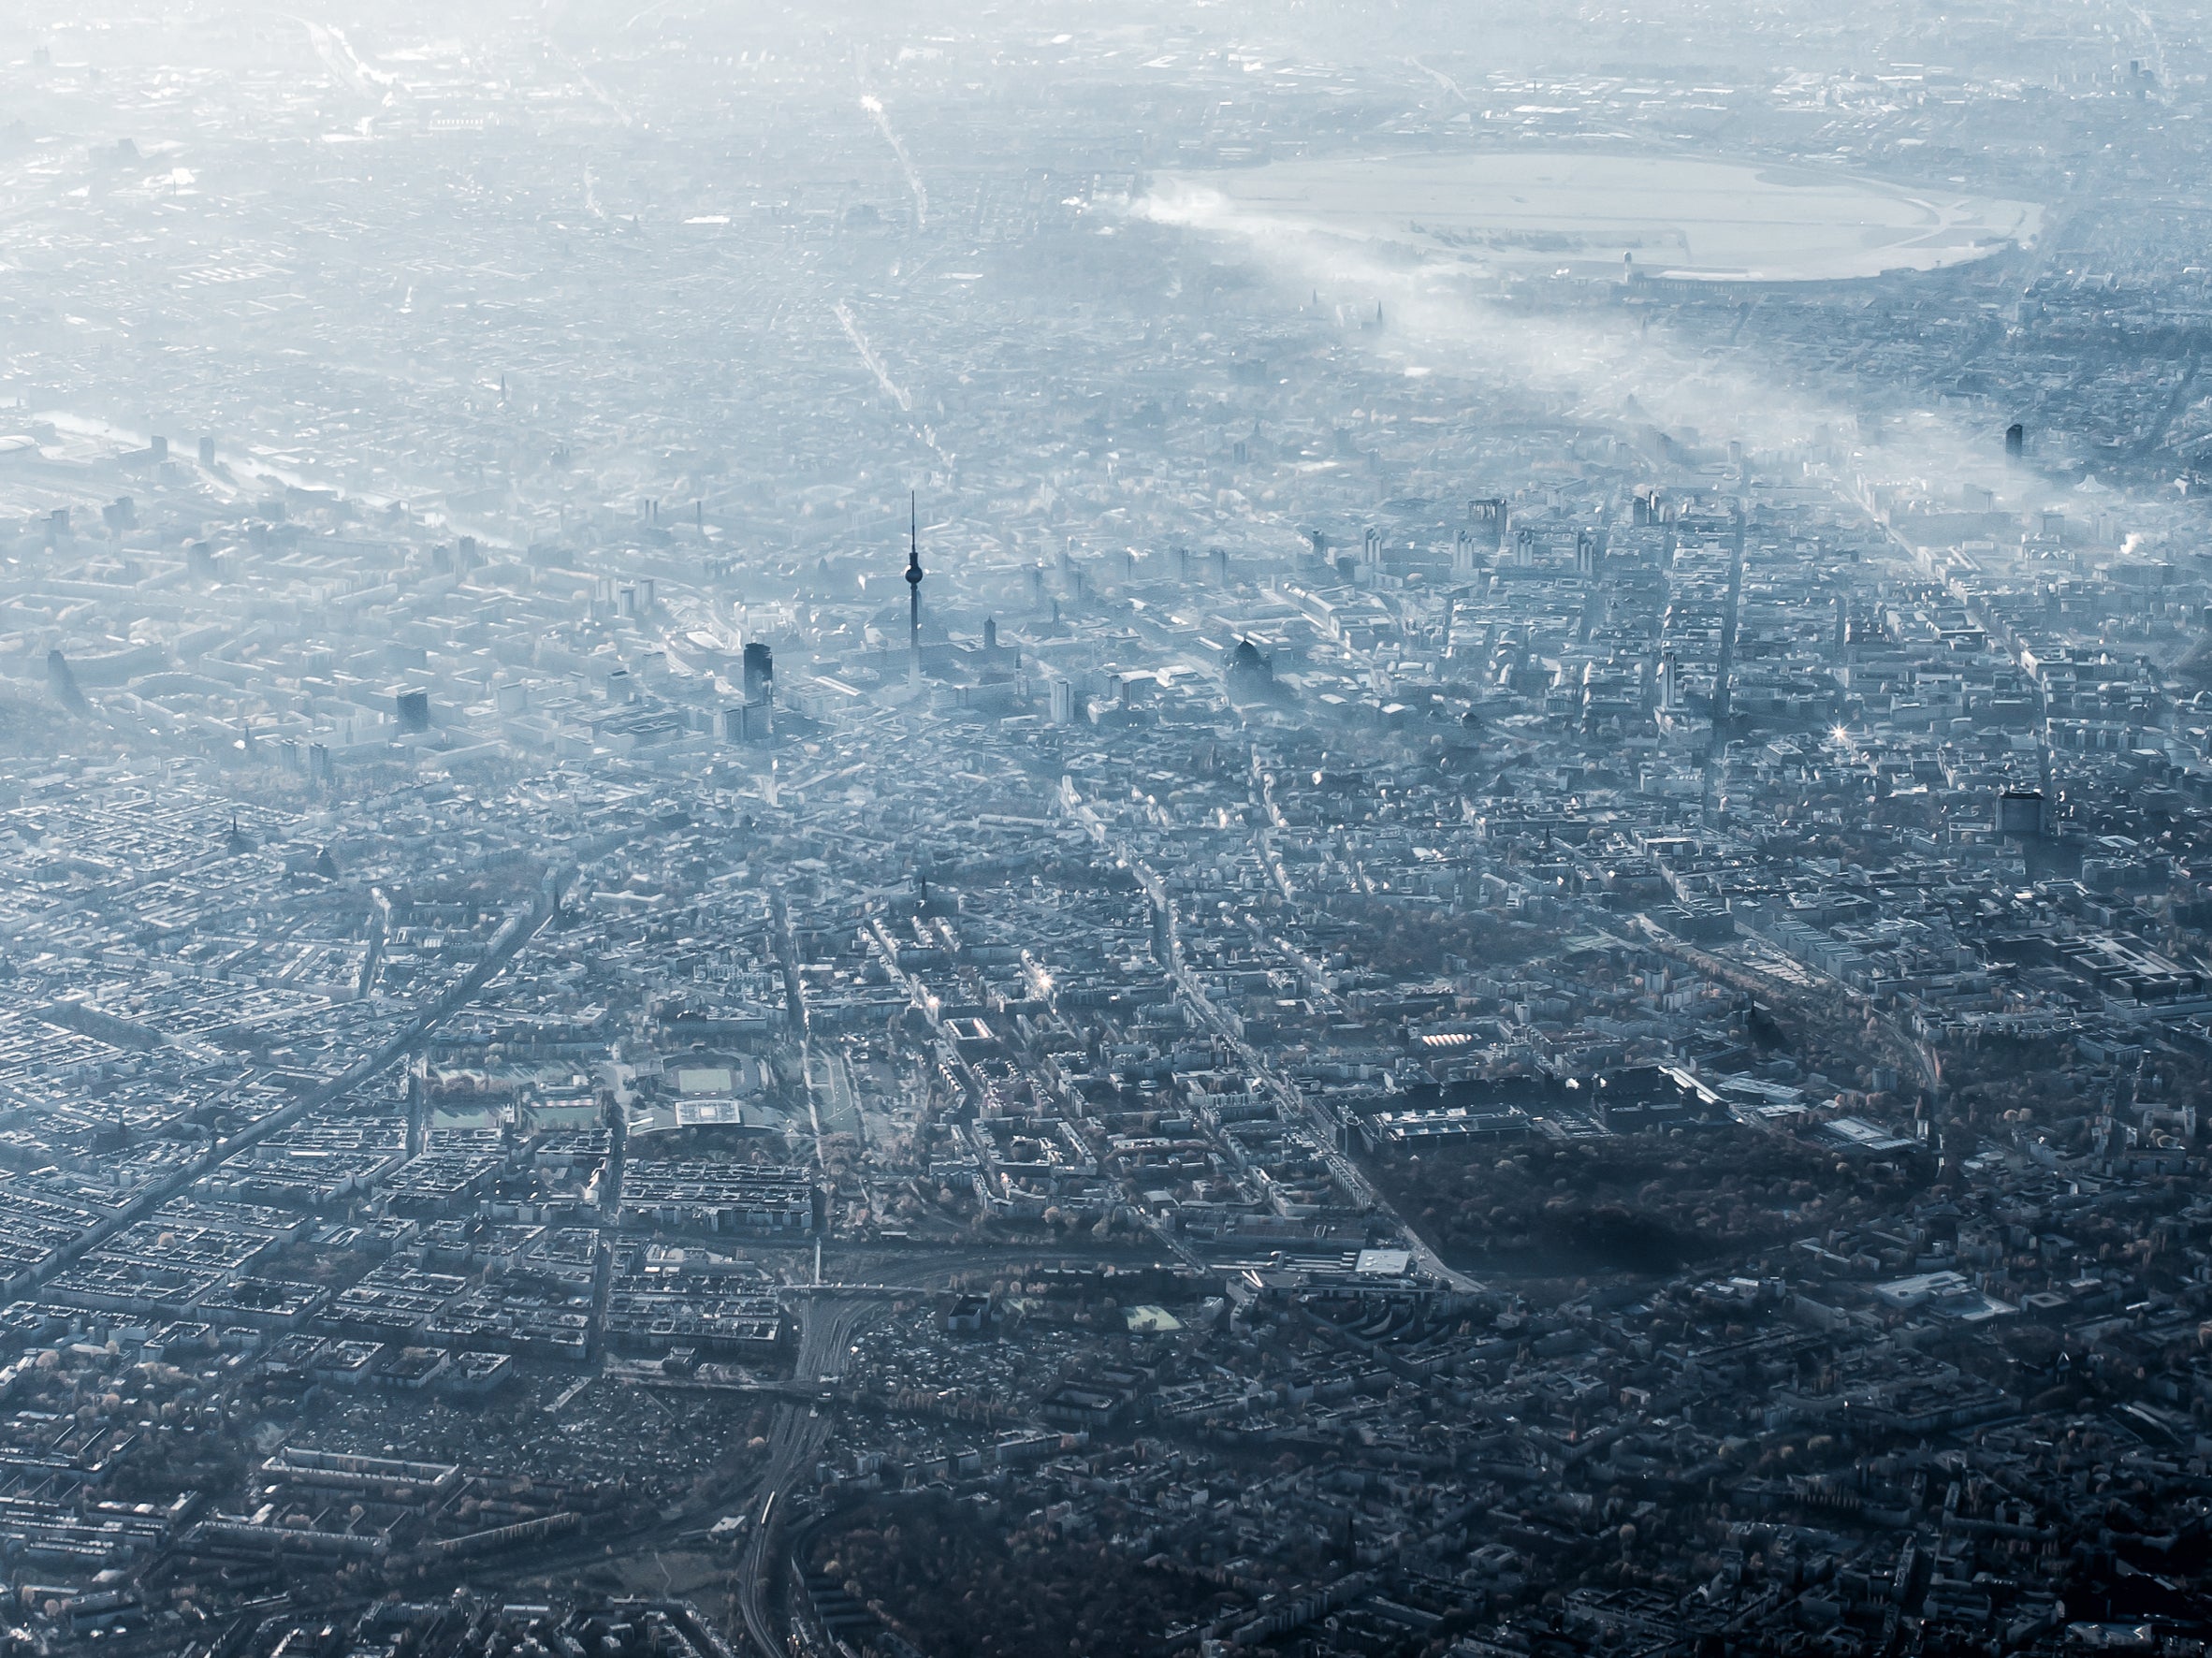 Berlin beneath cloud and smog